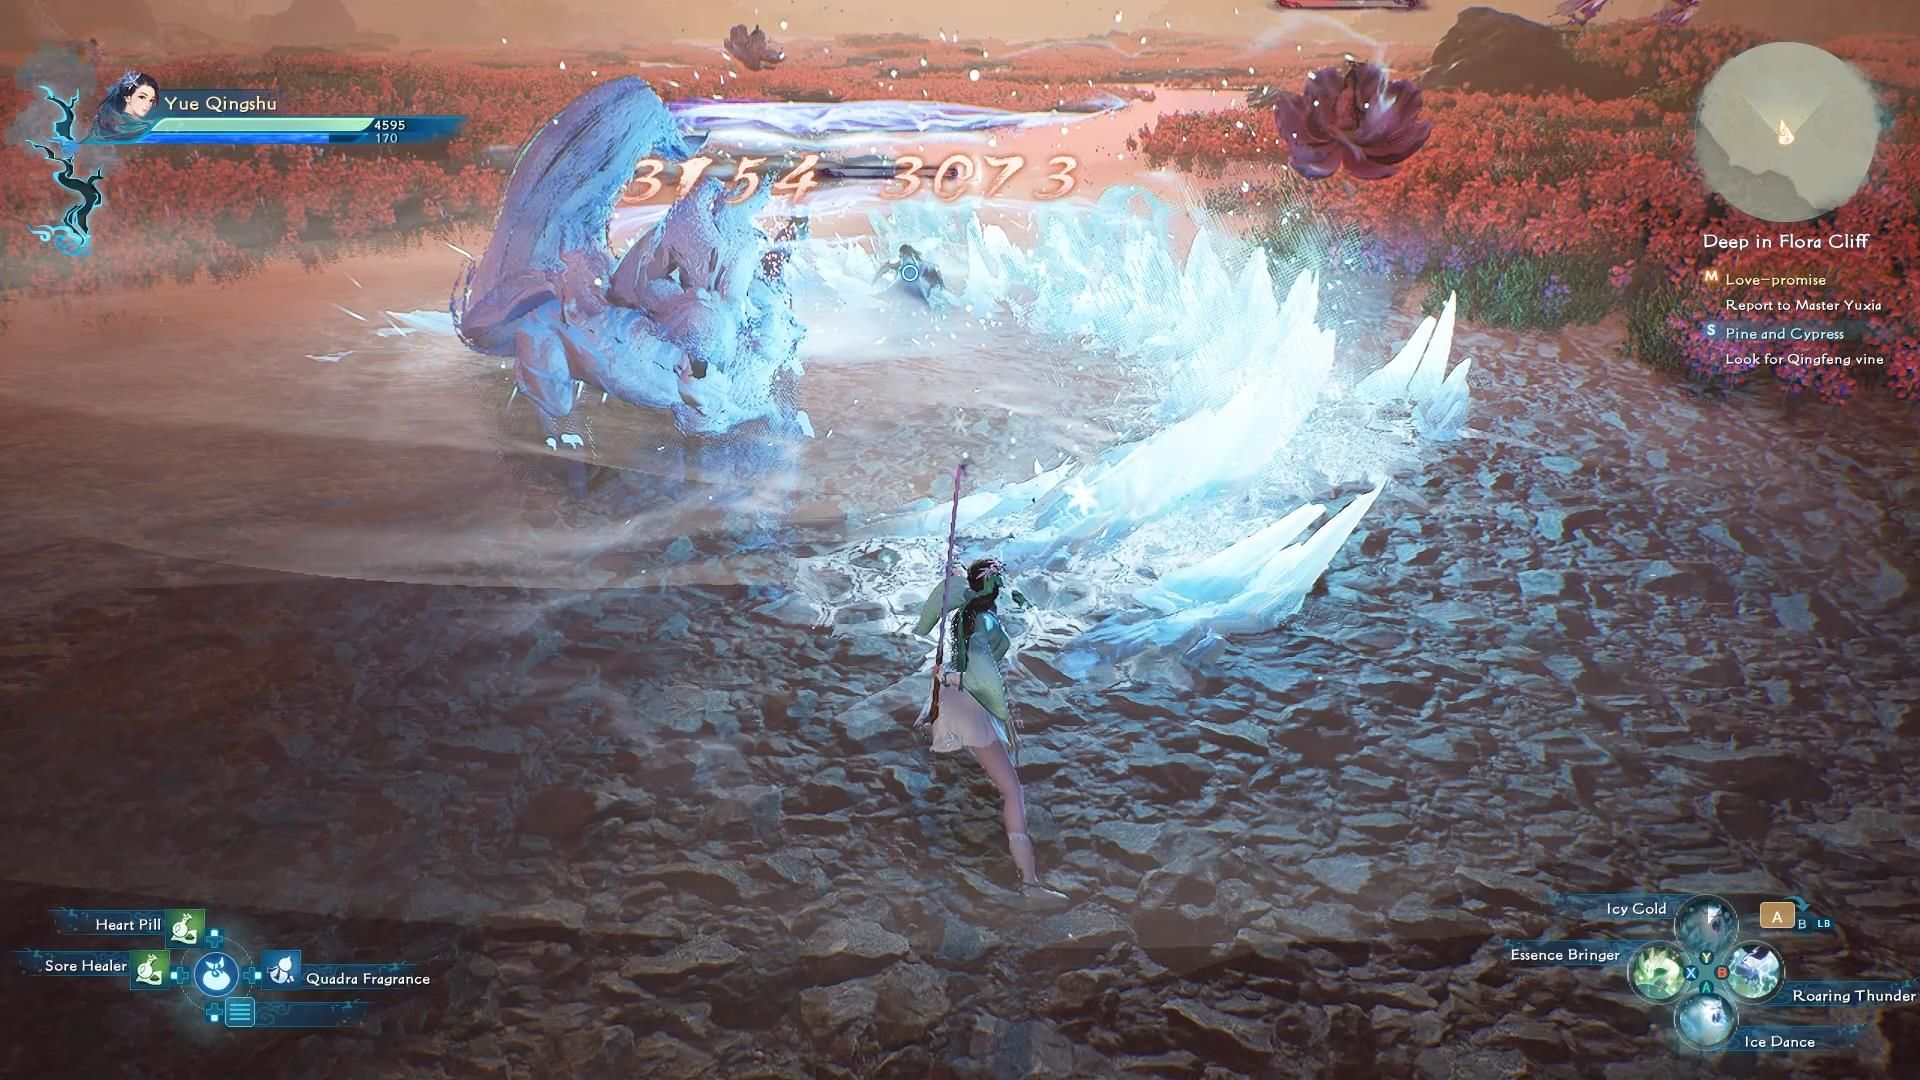 A Sword and Fairy: Together Forever július 6-án érkezik a Game Pass-ra